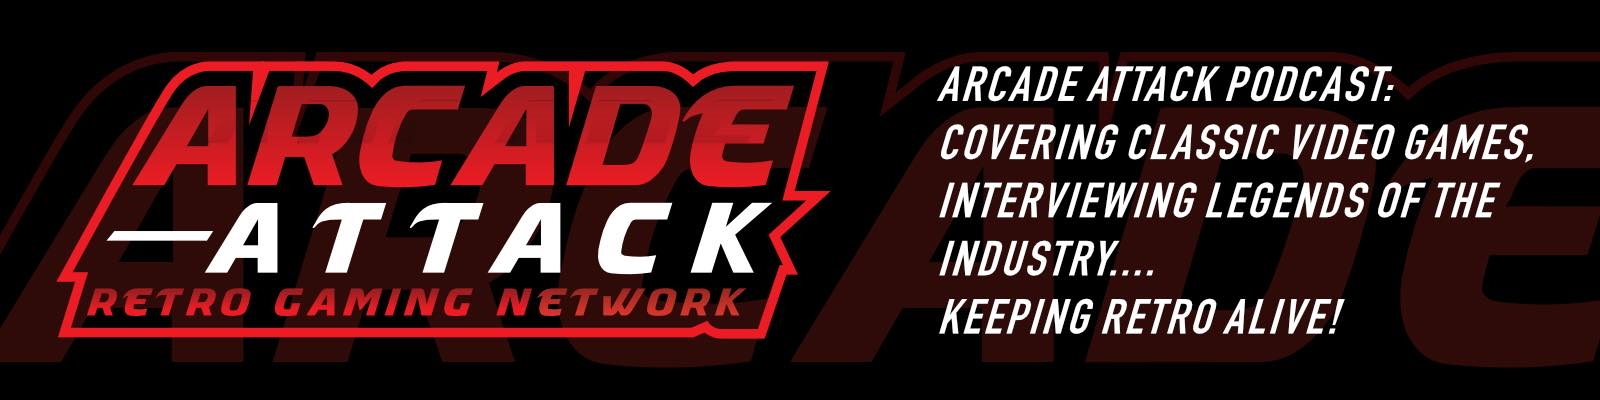 Arcade Attack Retro Gaming Podcast